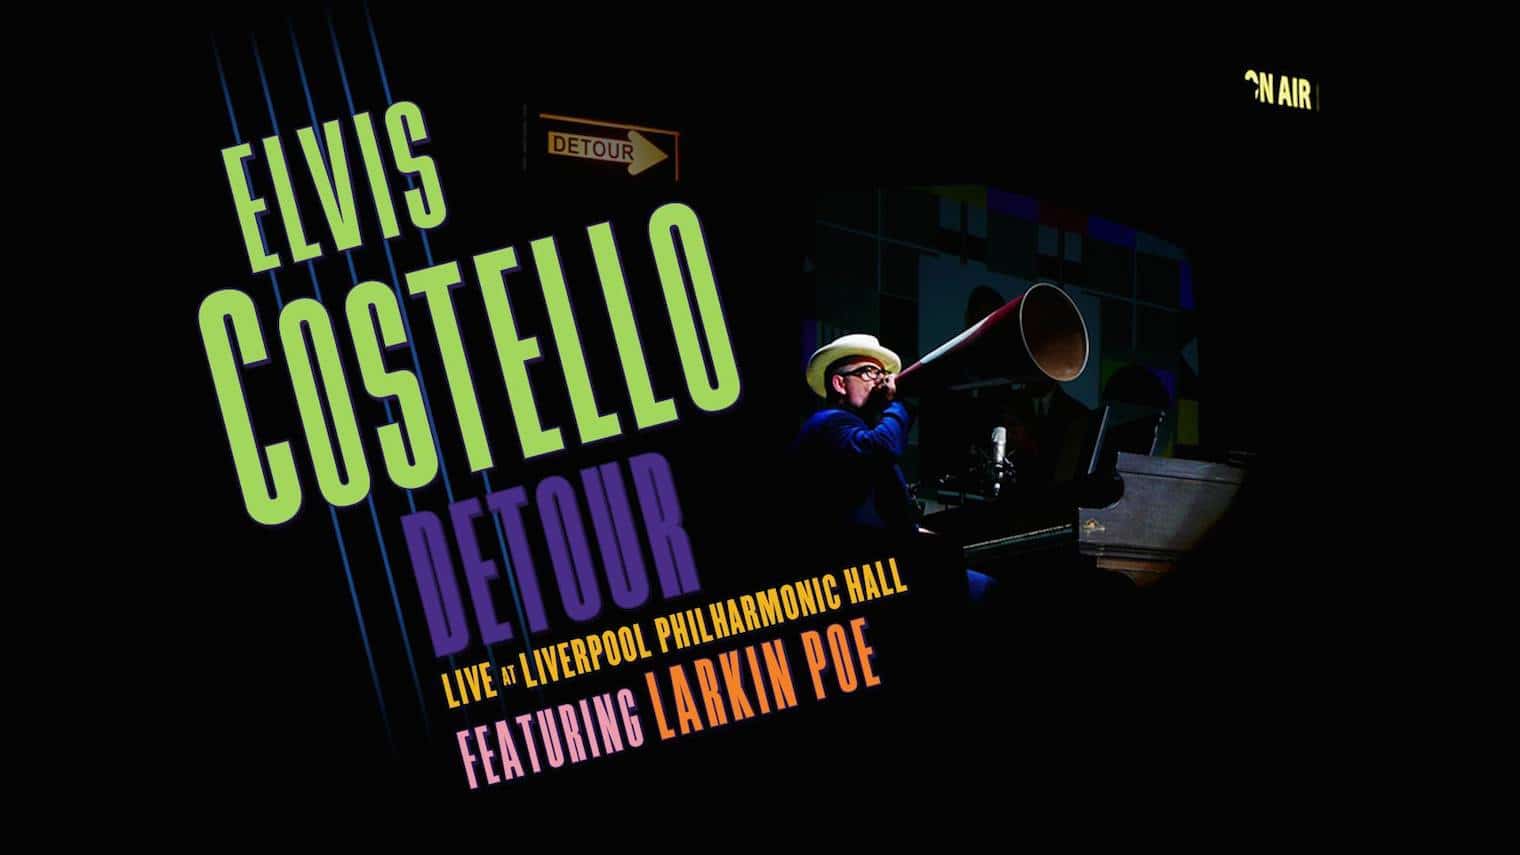 Elvis Costello: Detour – Live at Liverpool Philharmonic Hall DVD